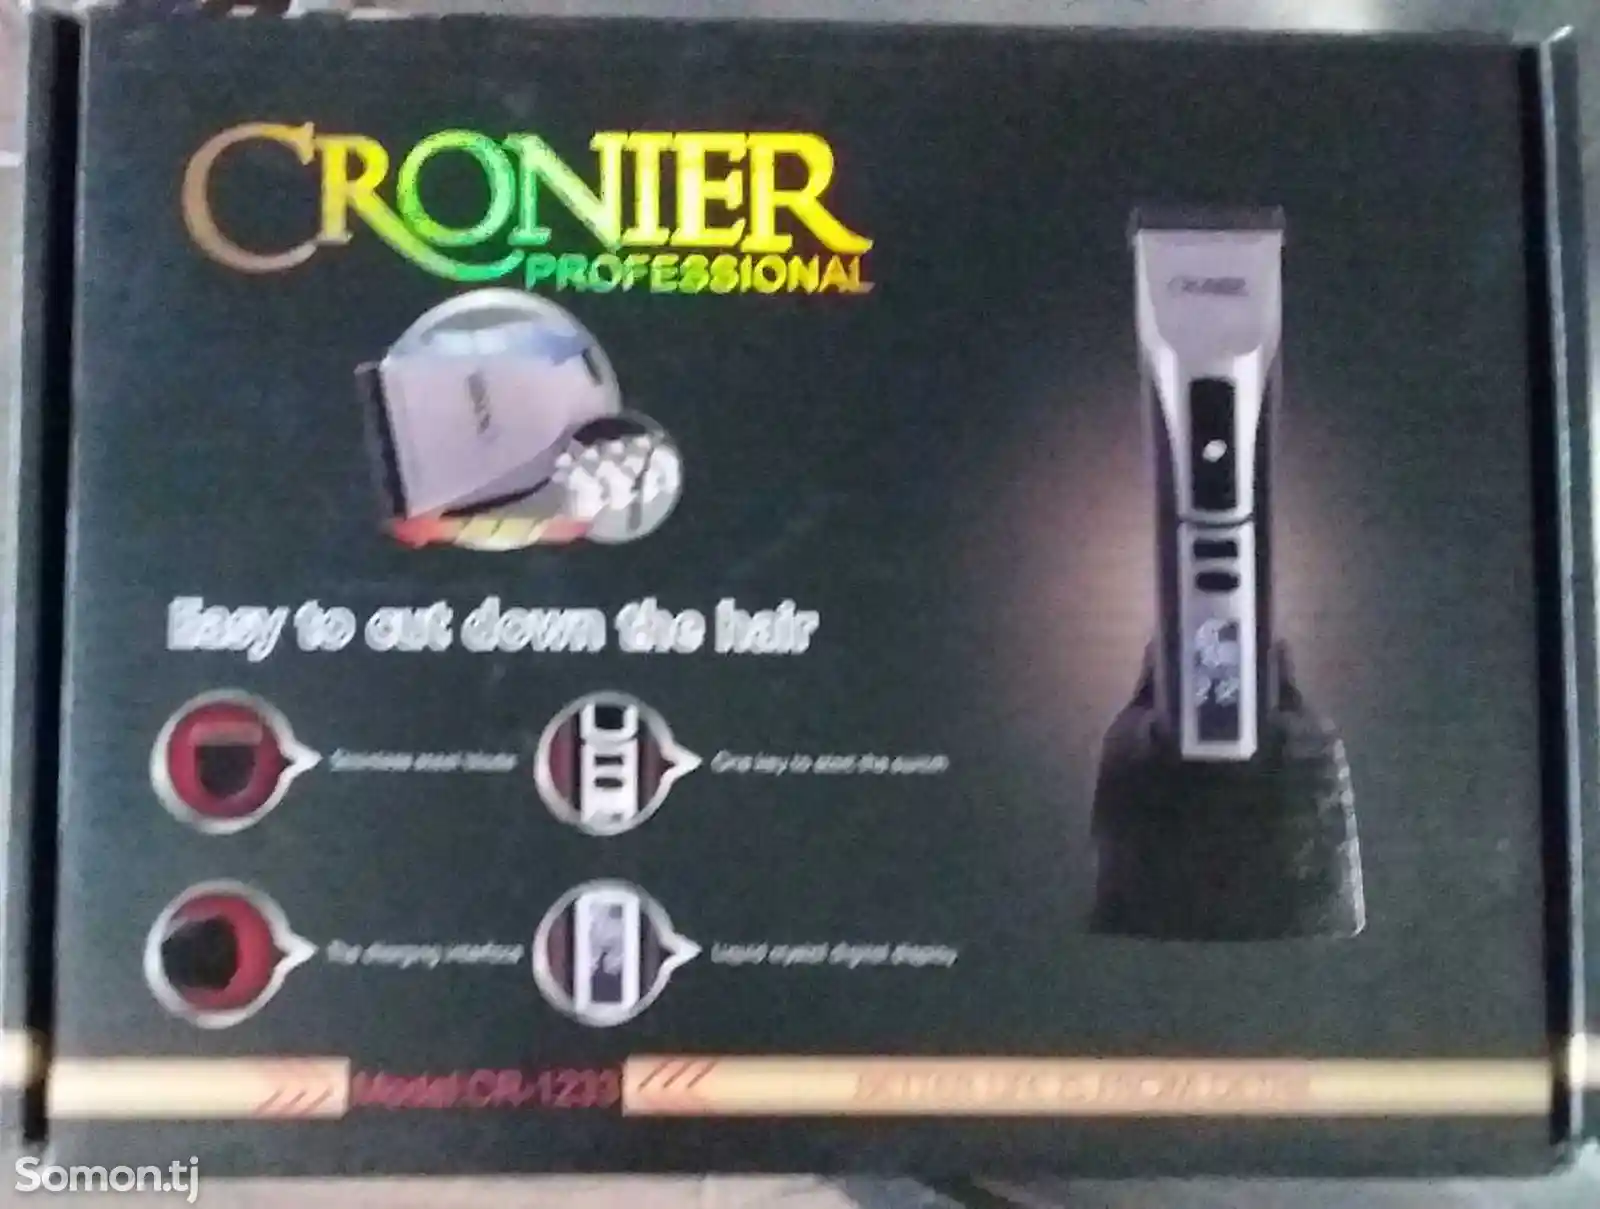 Триммер Cronier-1